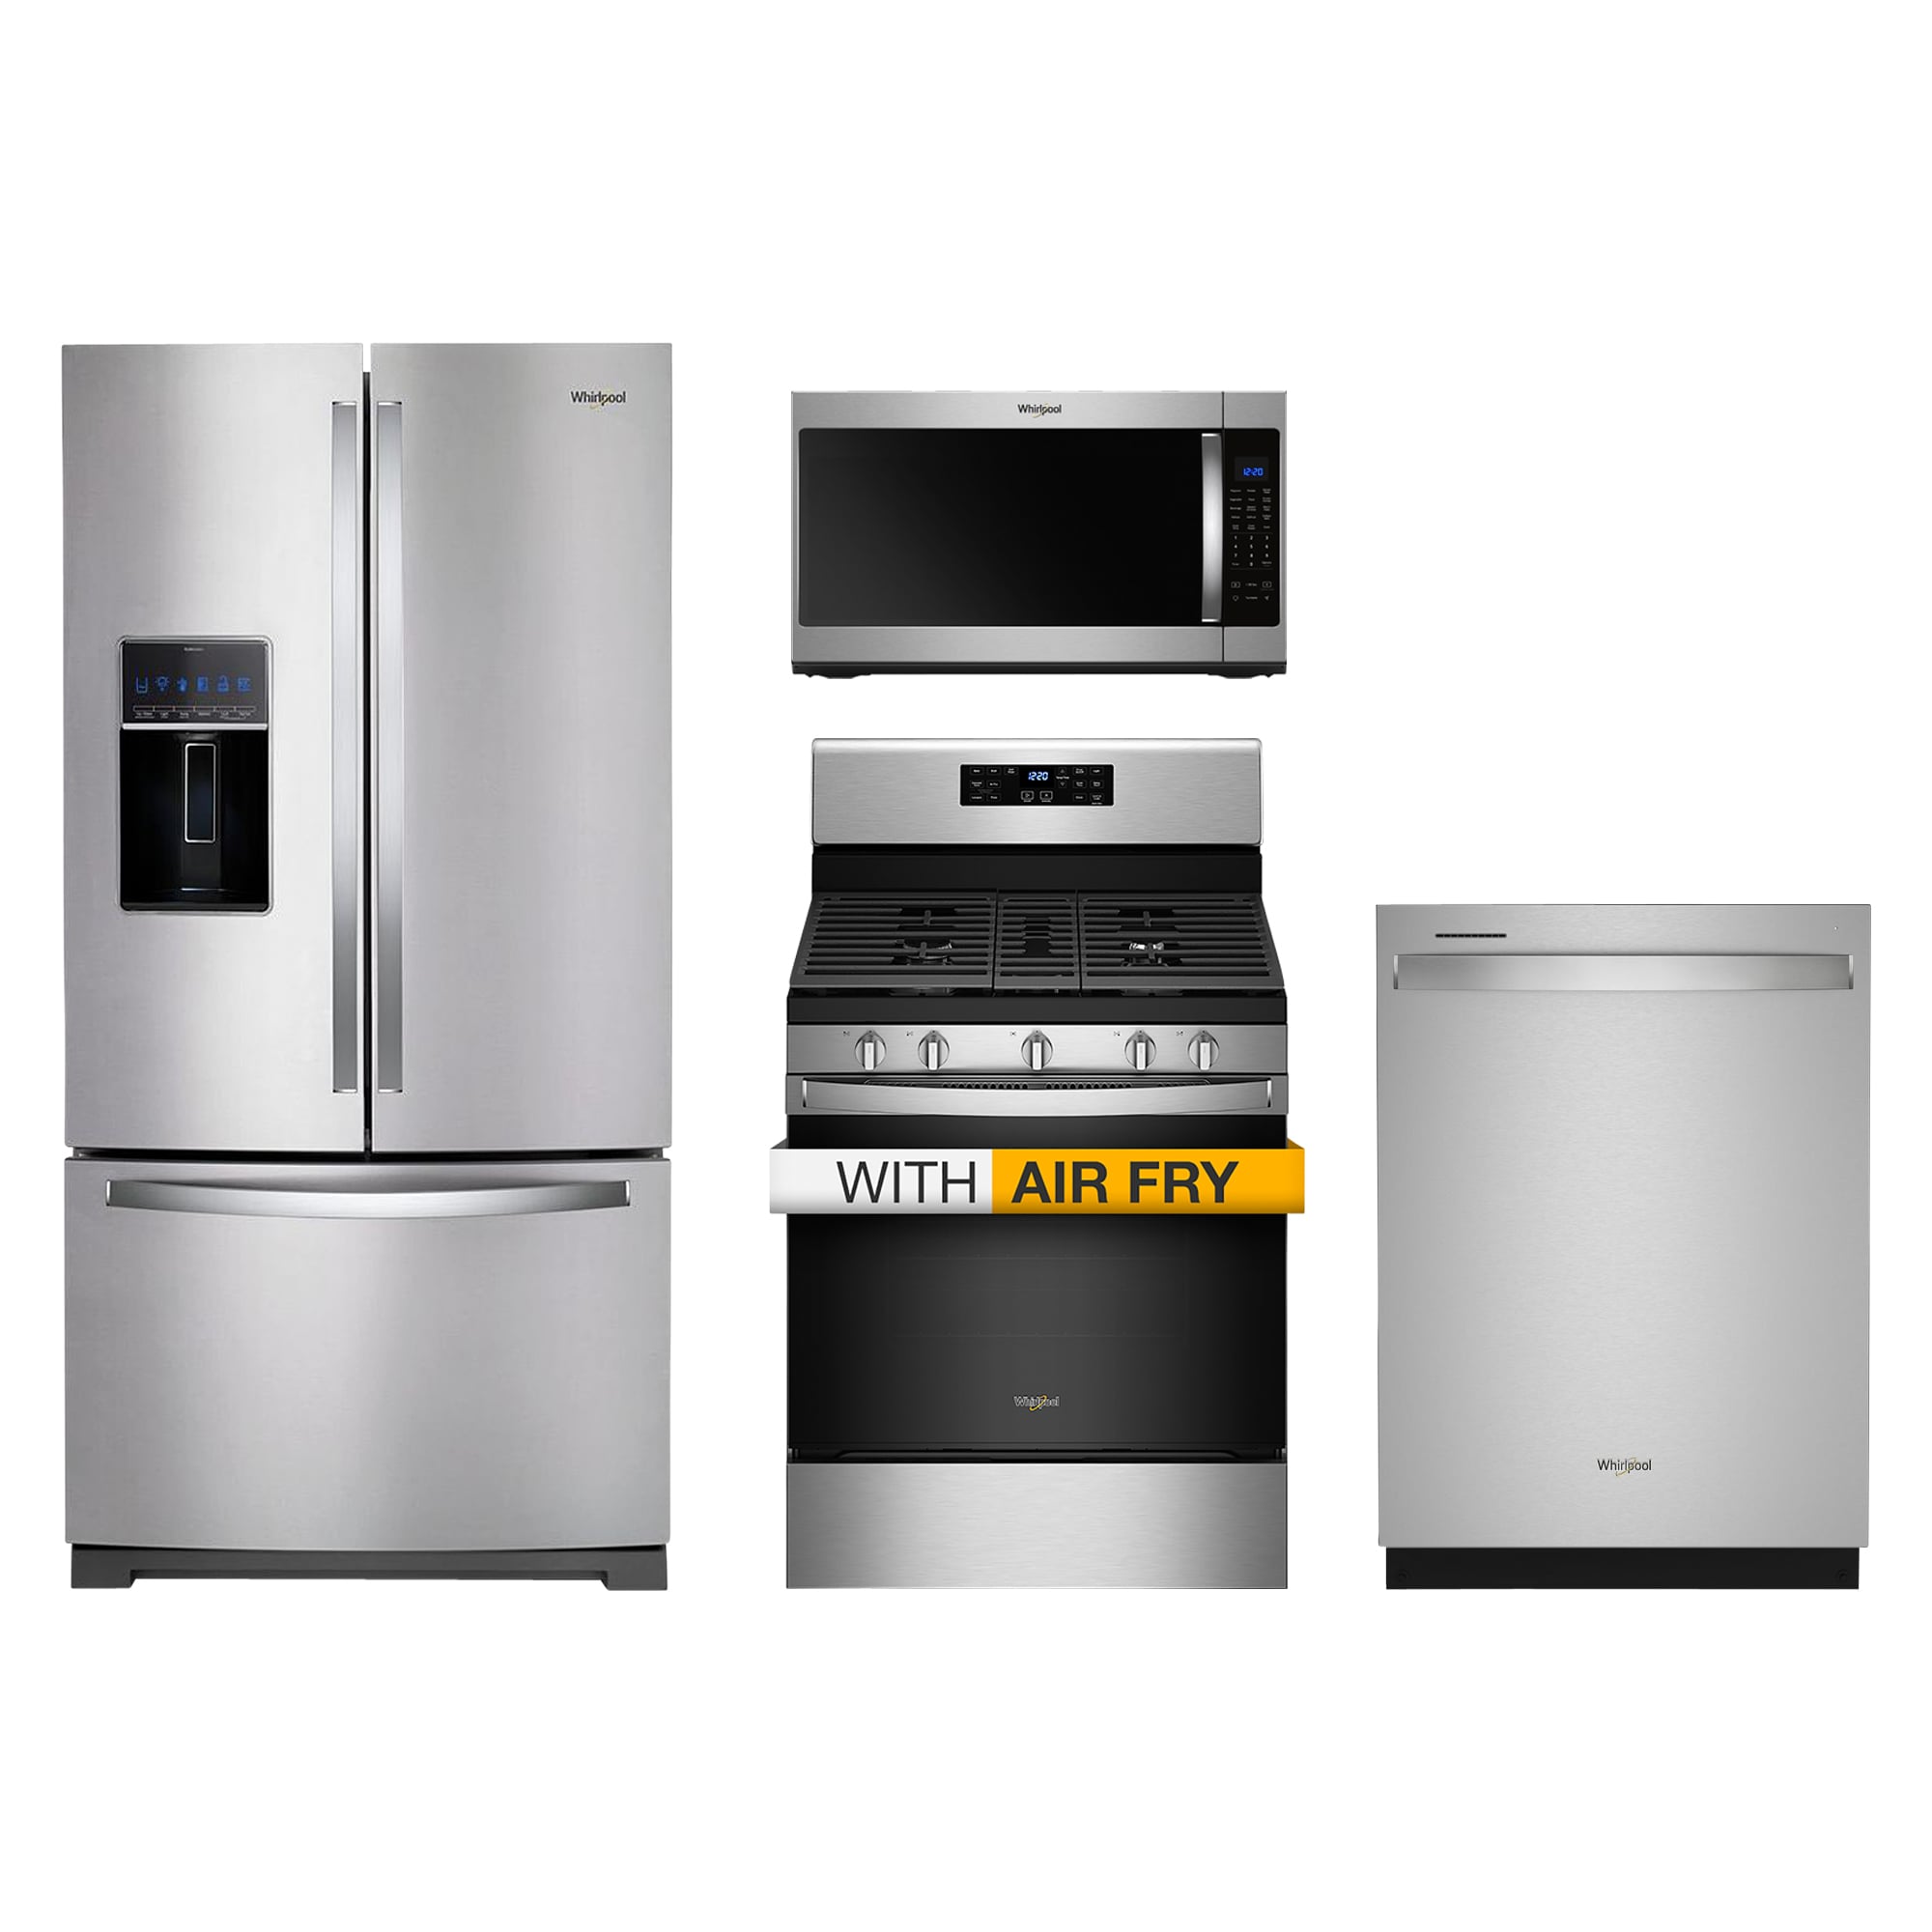 whirlpool french-door refrigerator & gas range suite in  fingerprint-resistant stainless steel